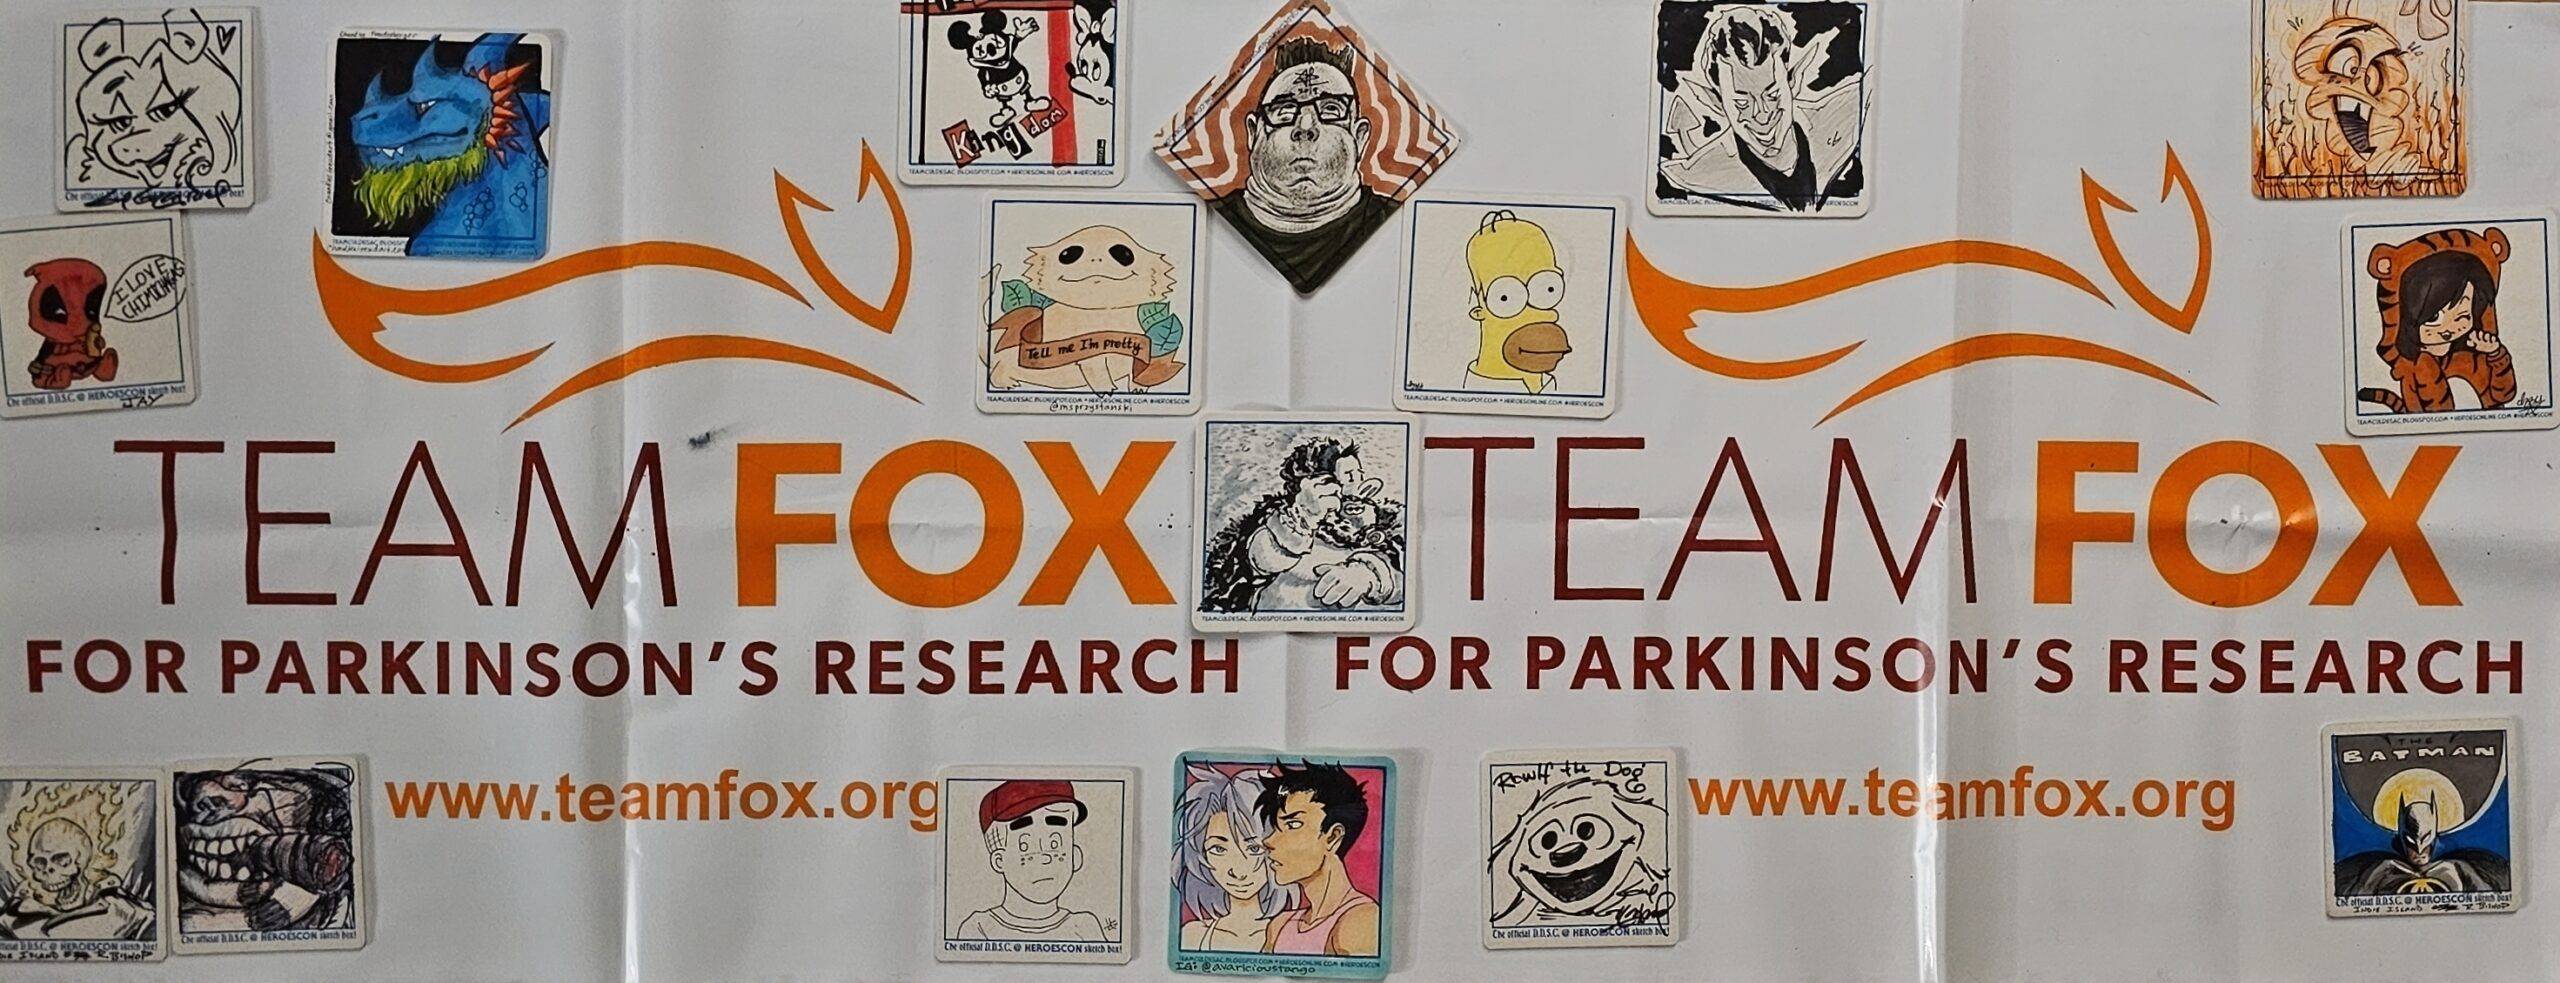 Team Fox banner